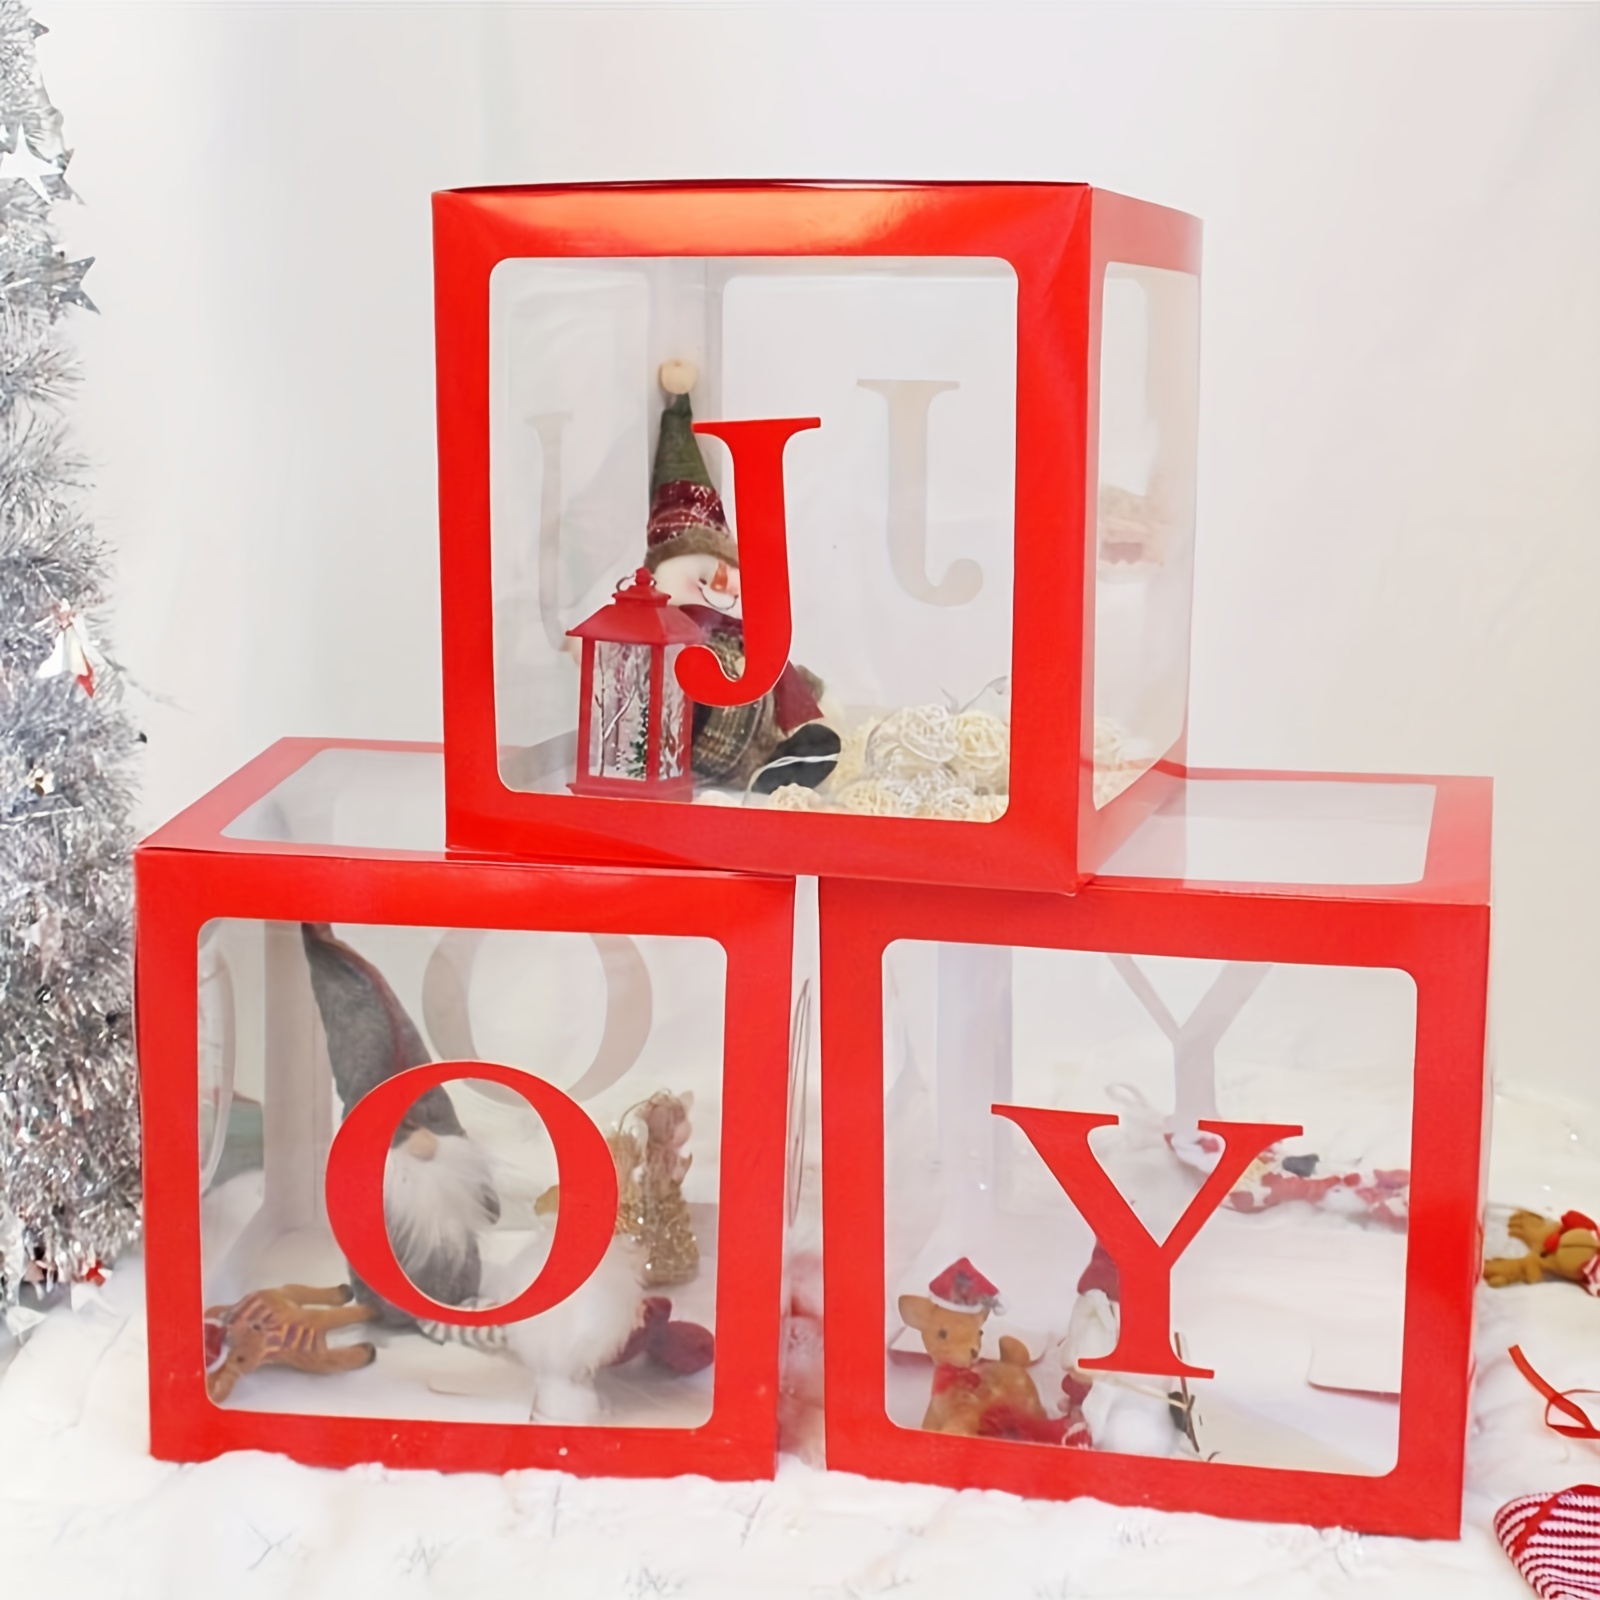 

3pcs Christmas Decorations Large Red Transparent Joy Box Joy Blocks Decorations For Holiday Party Decorations, Home Decor, Fireplace Decor